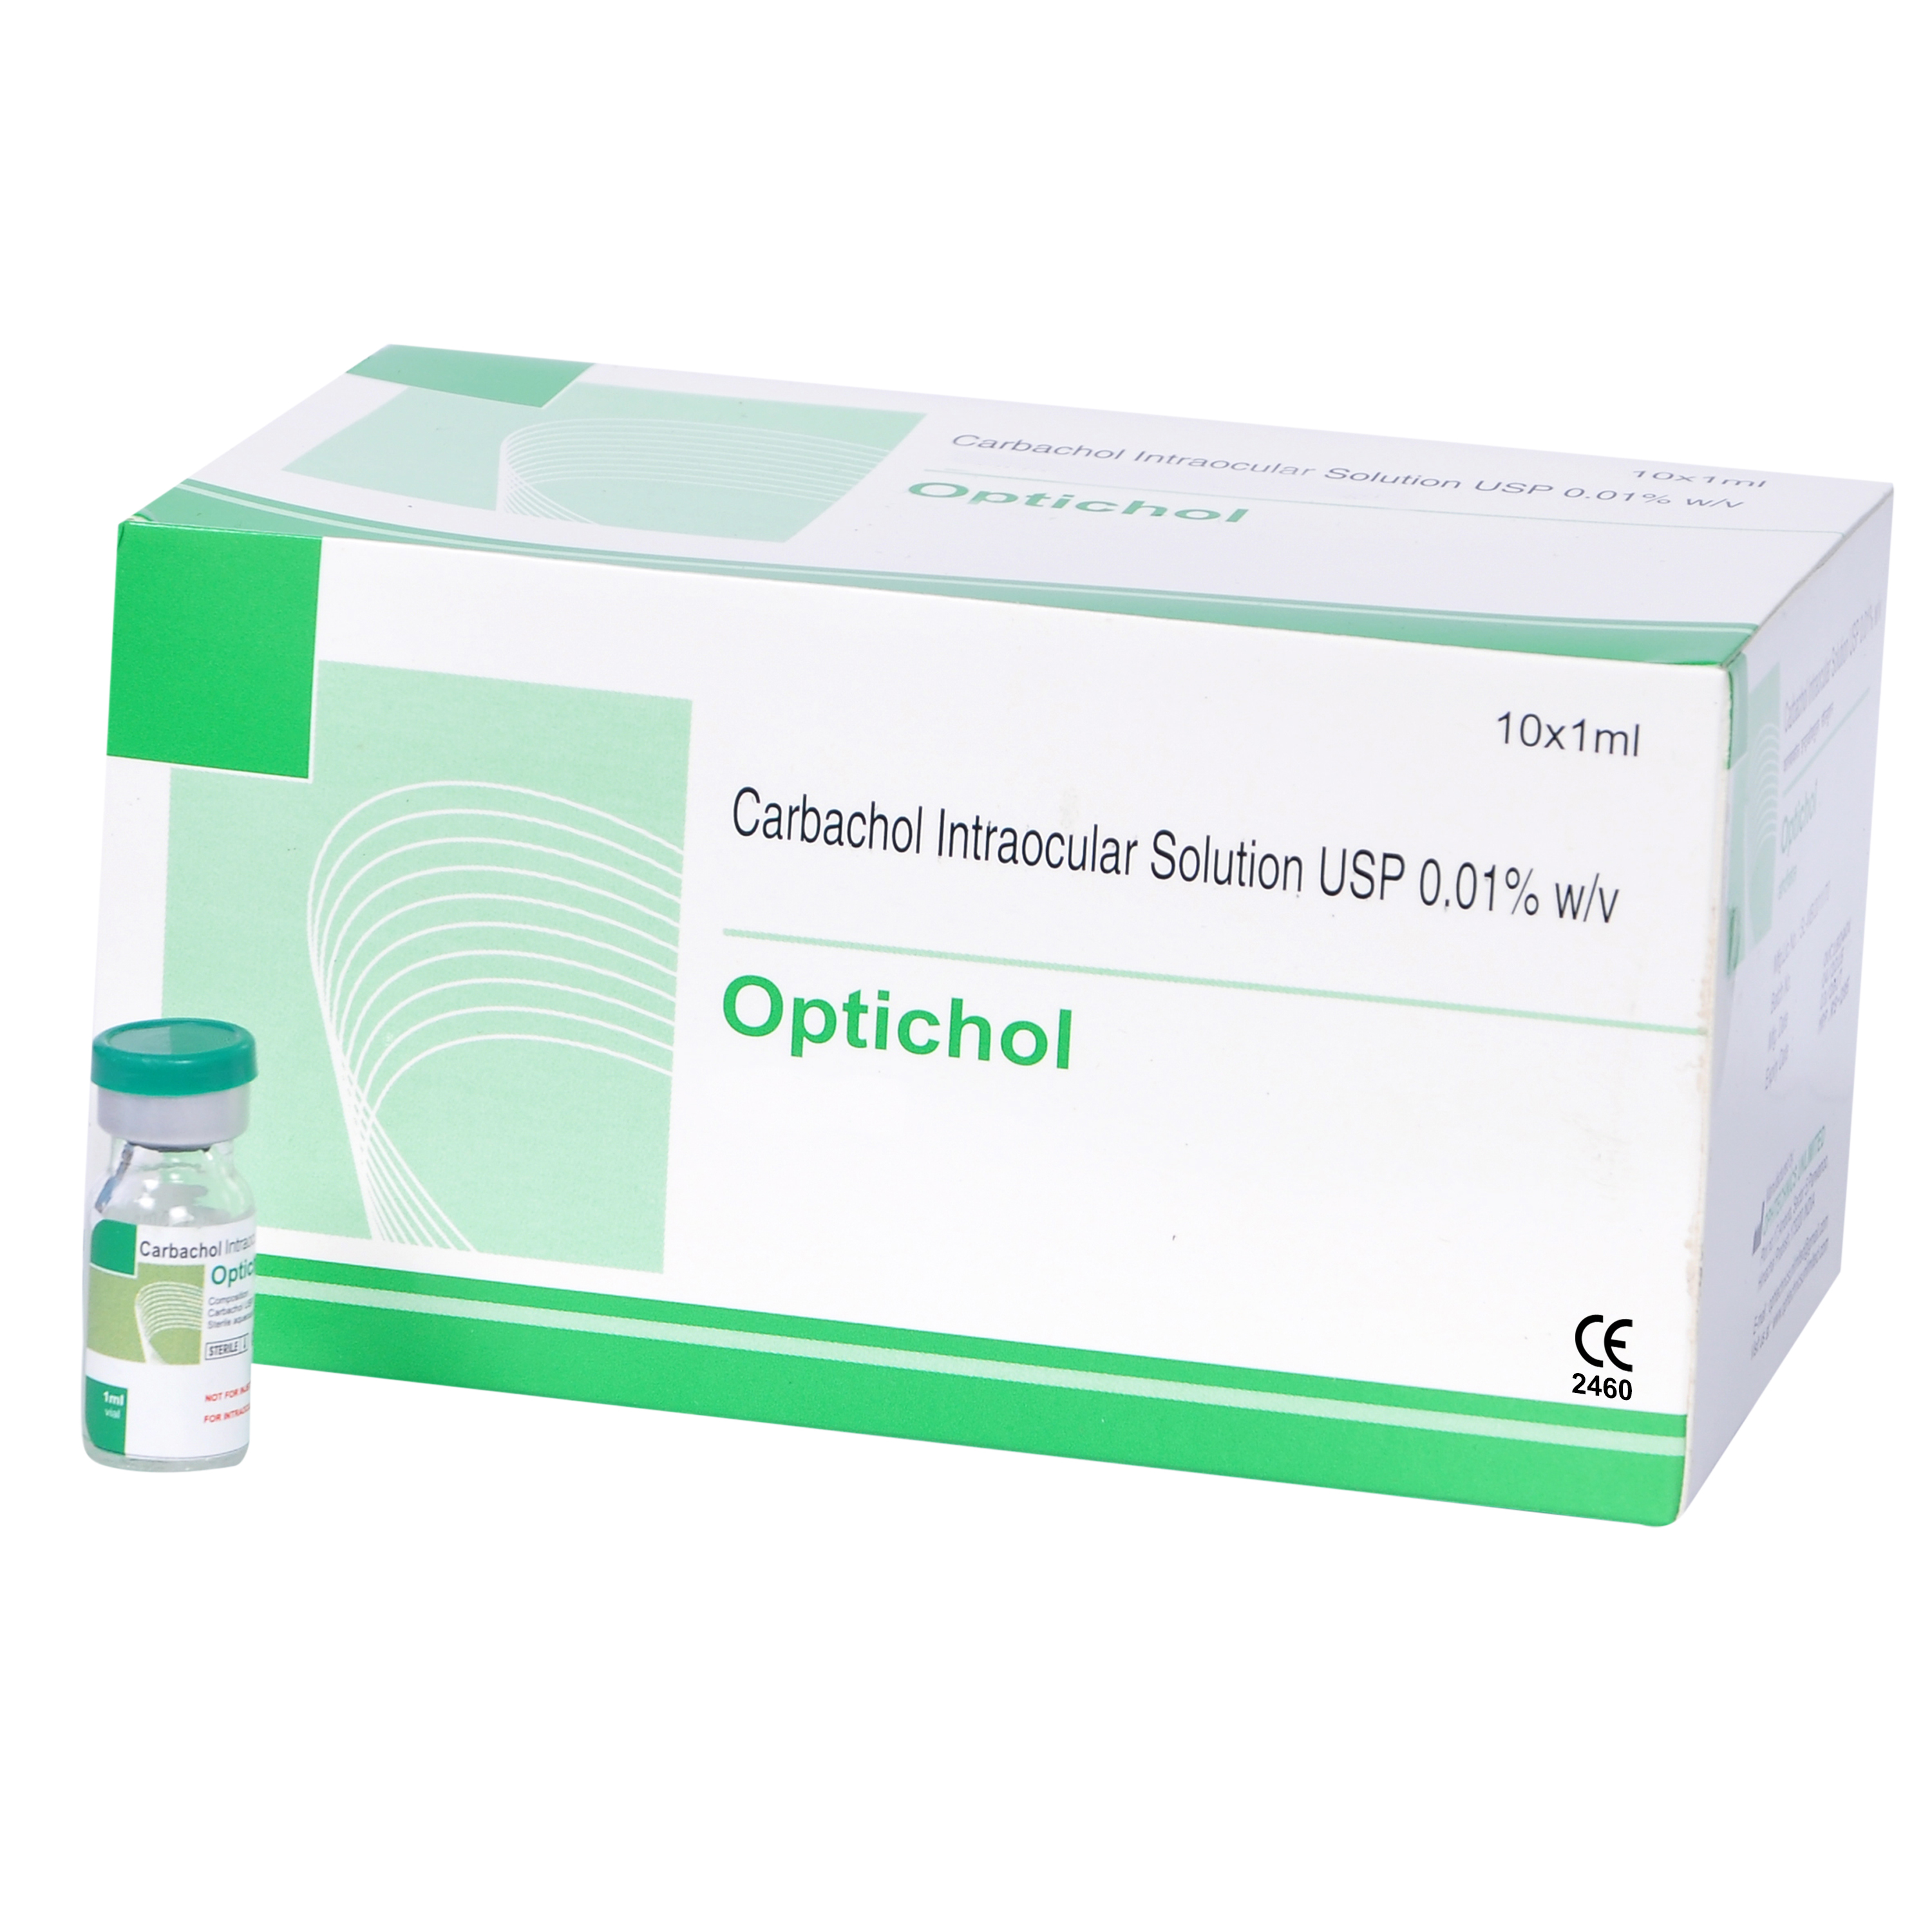 Carbachol Intraocular Solution 0.01%